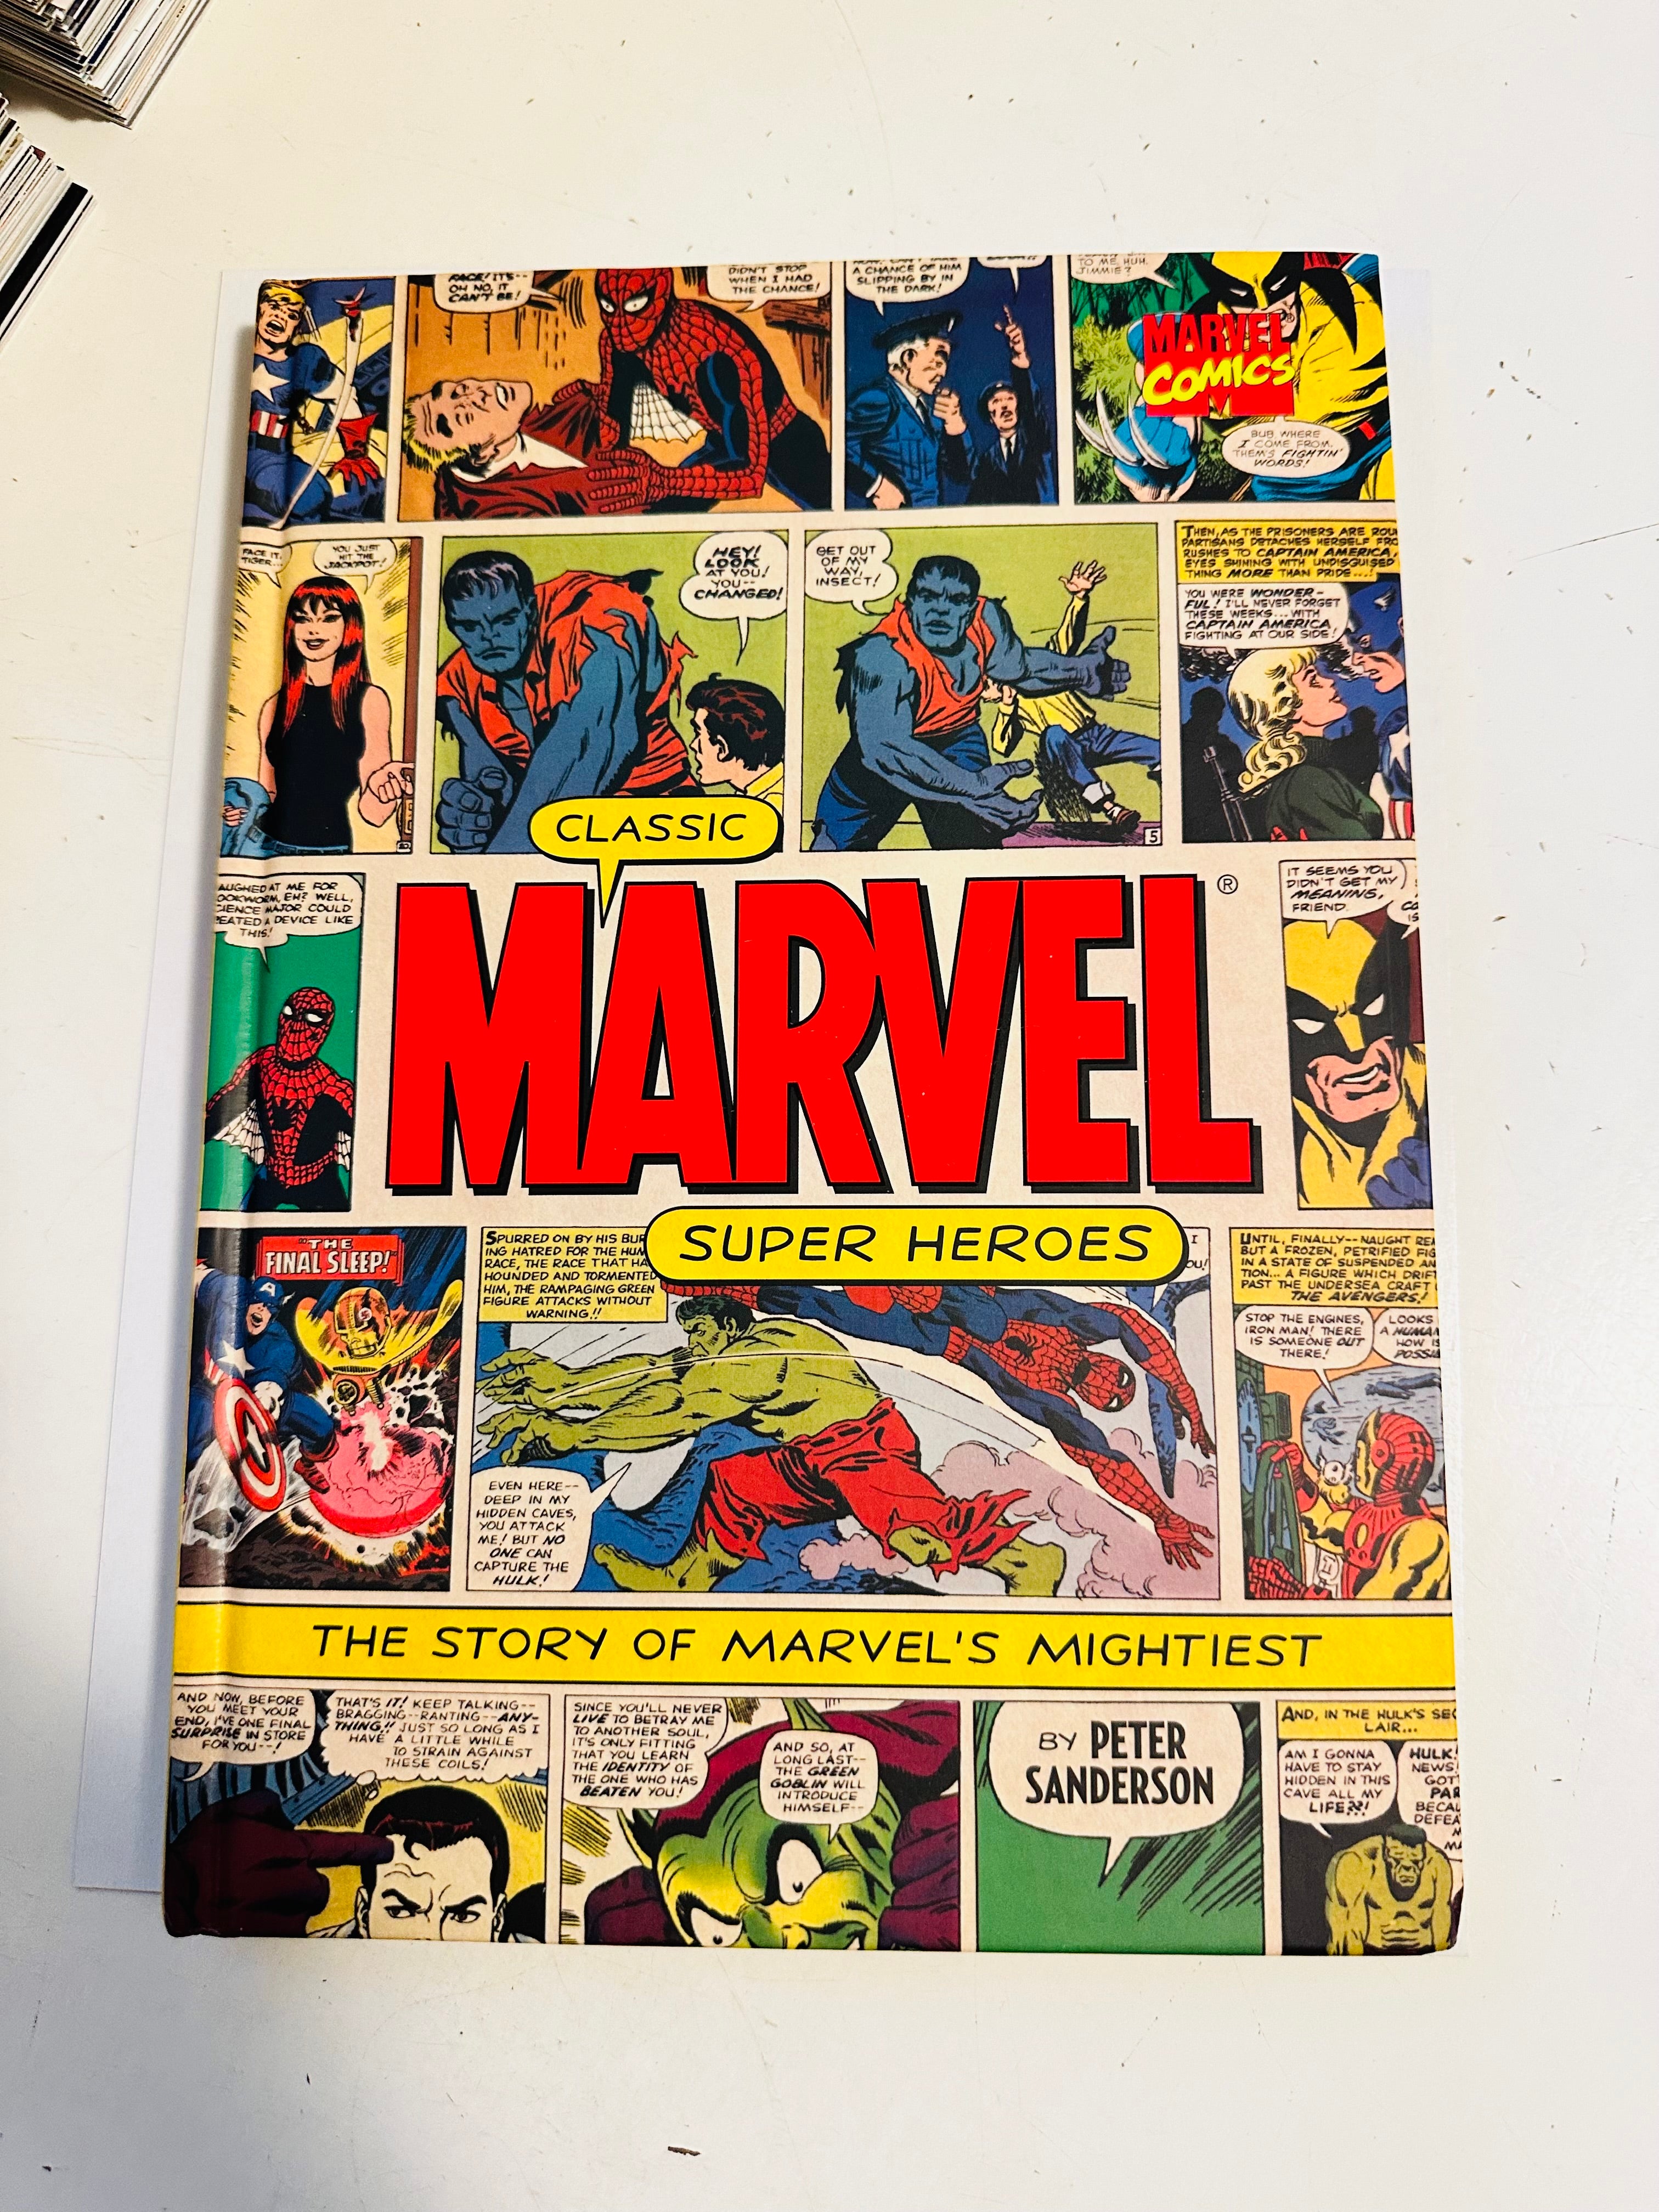 Classic marvel superheroes storybook, 2005